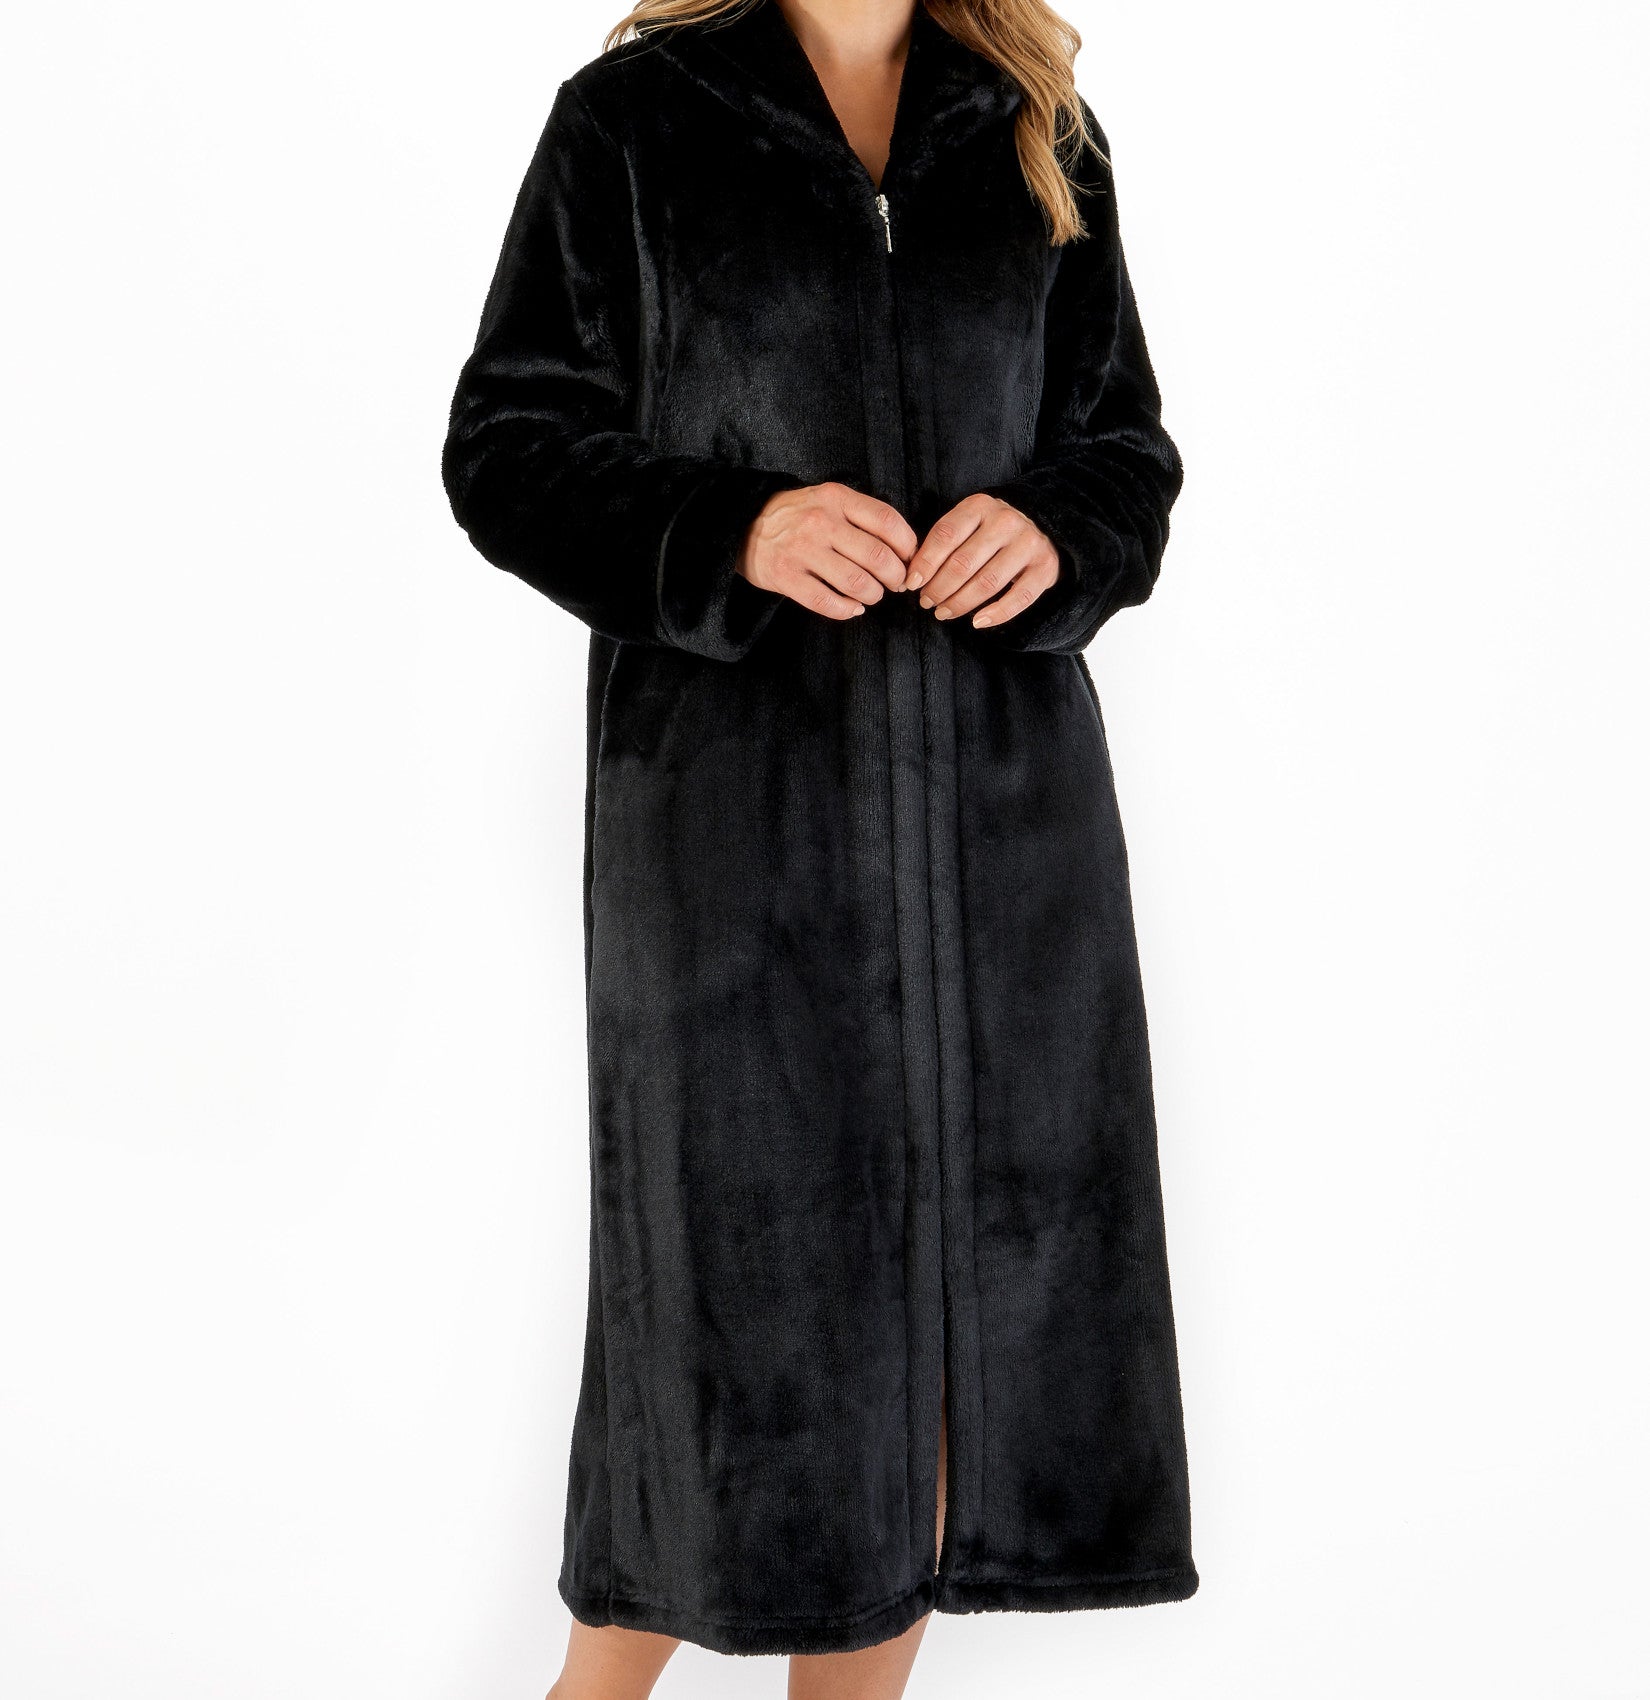 Chelsea Peers LINEAR TIGER PRINT - Dressing gown - black - Zalando.de